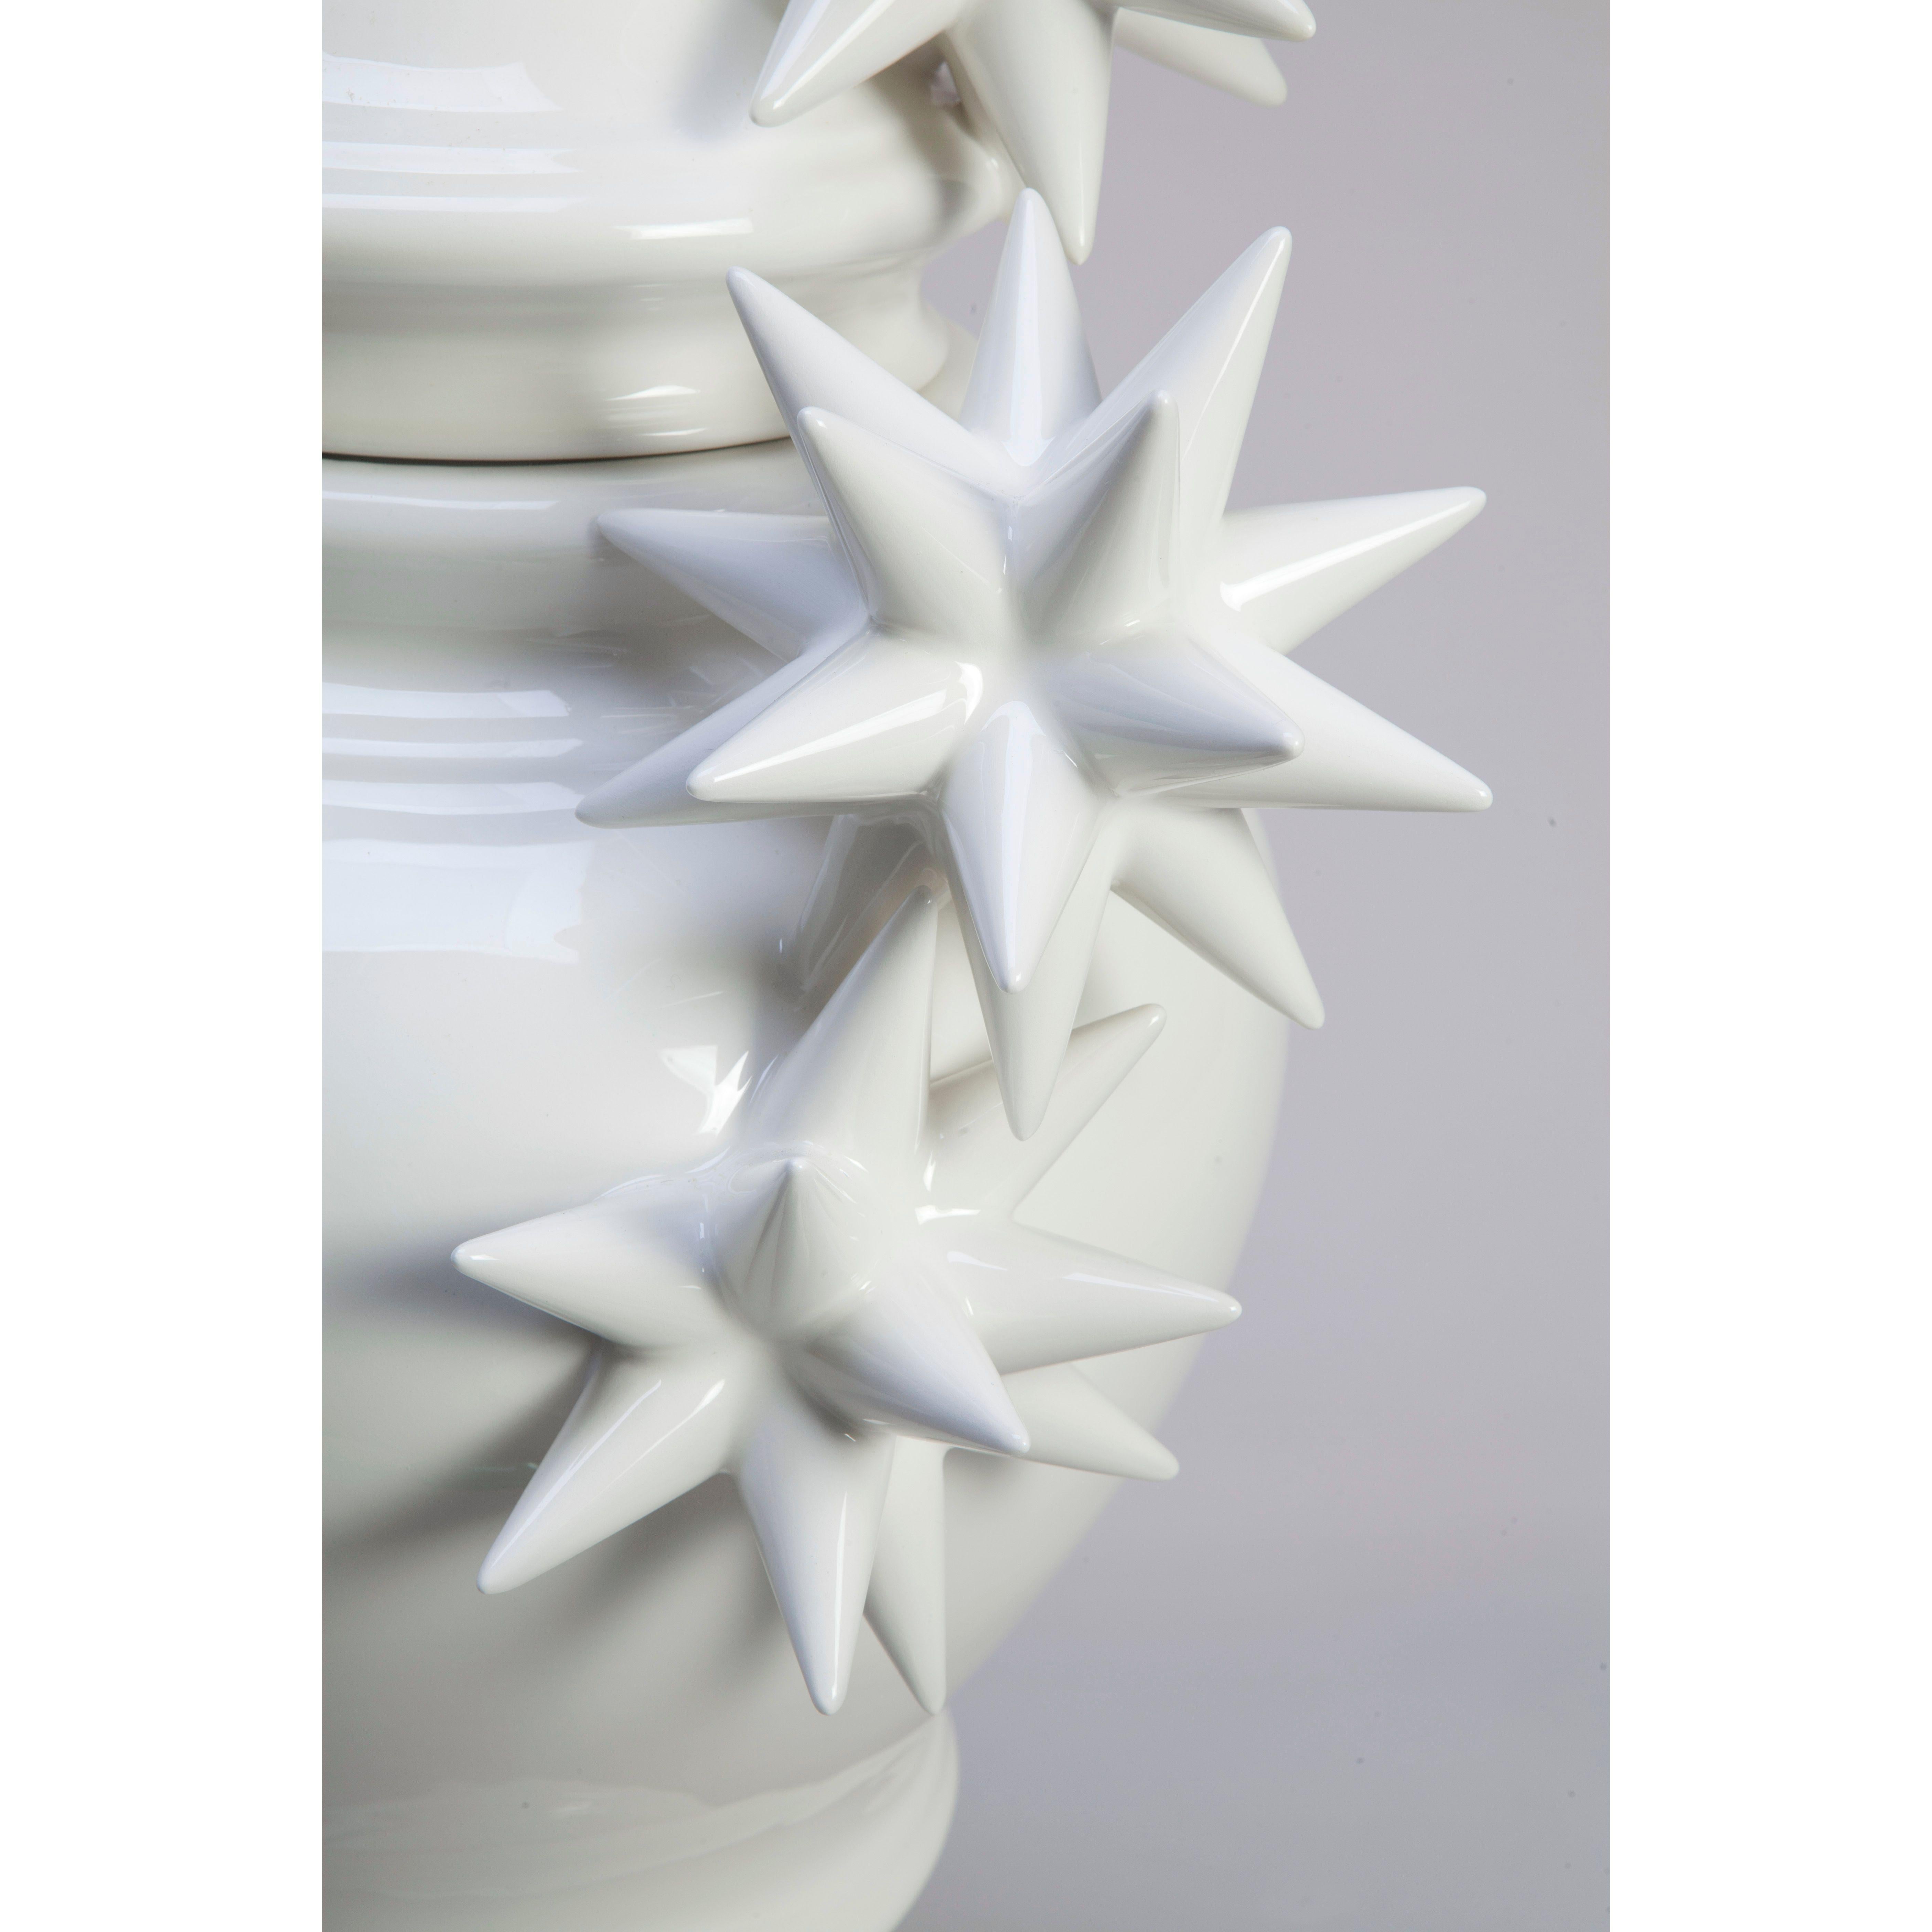 Italian Large White Ceramic vase by Andrea Salvatori 21st Century Contemporary For Sale